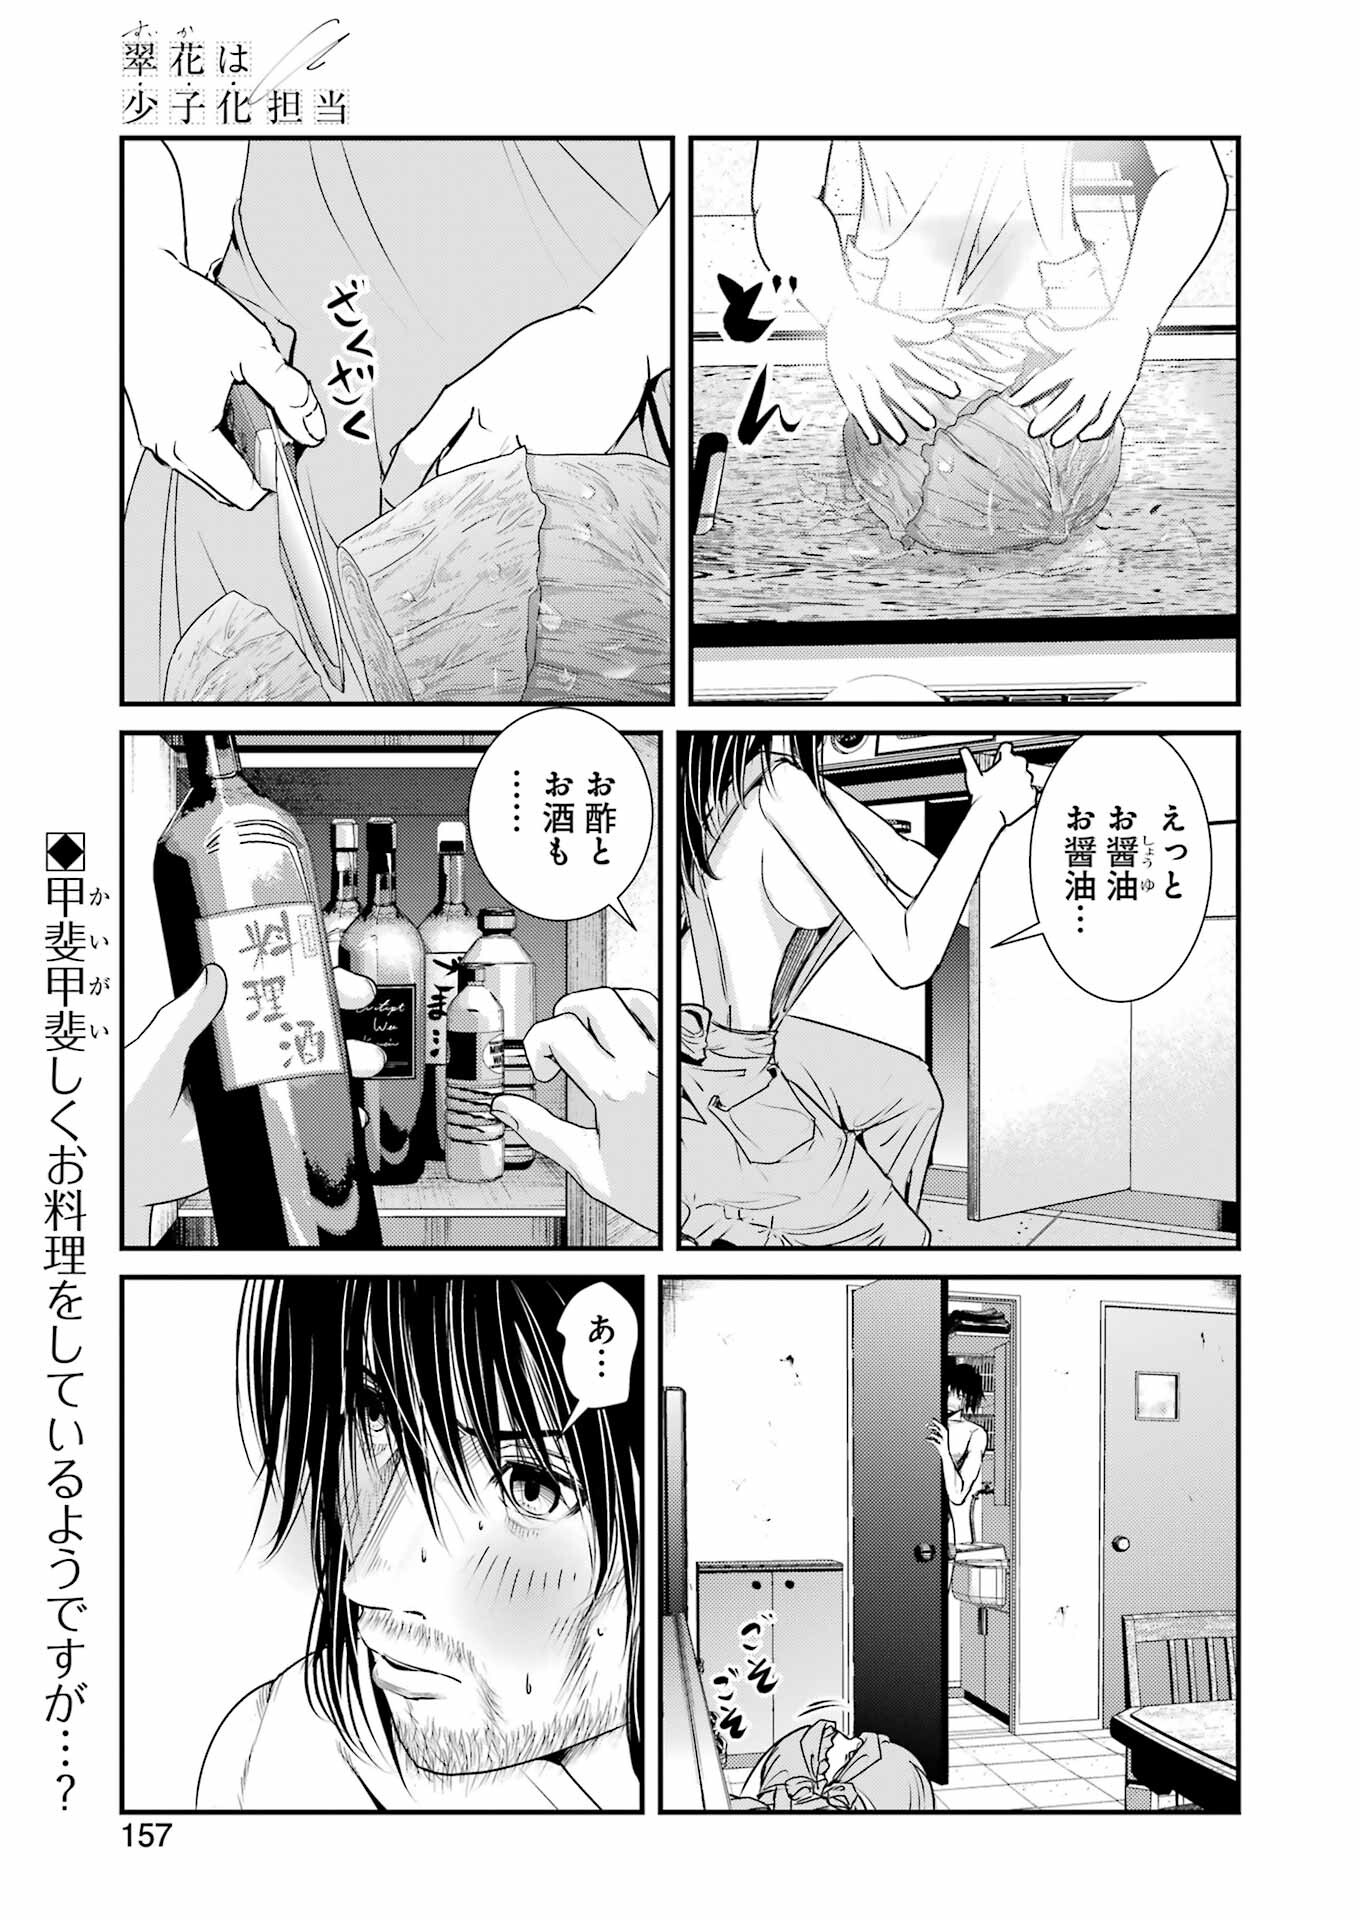 Suika wa Shoushika Tantou - Chapter 5 - Page 1